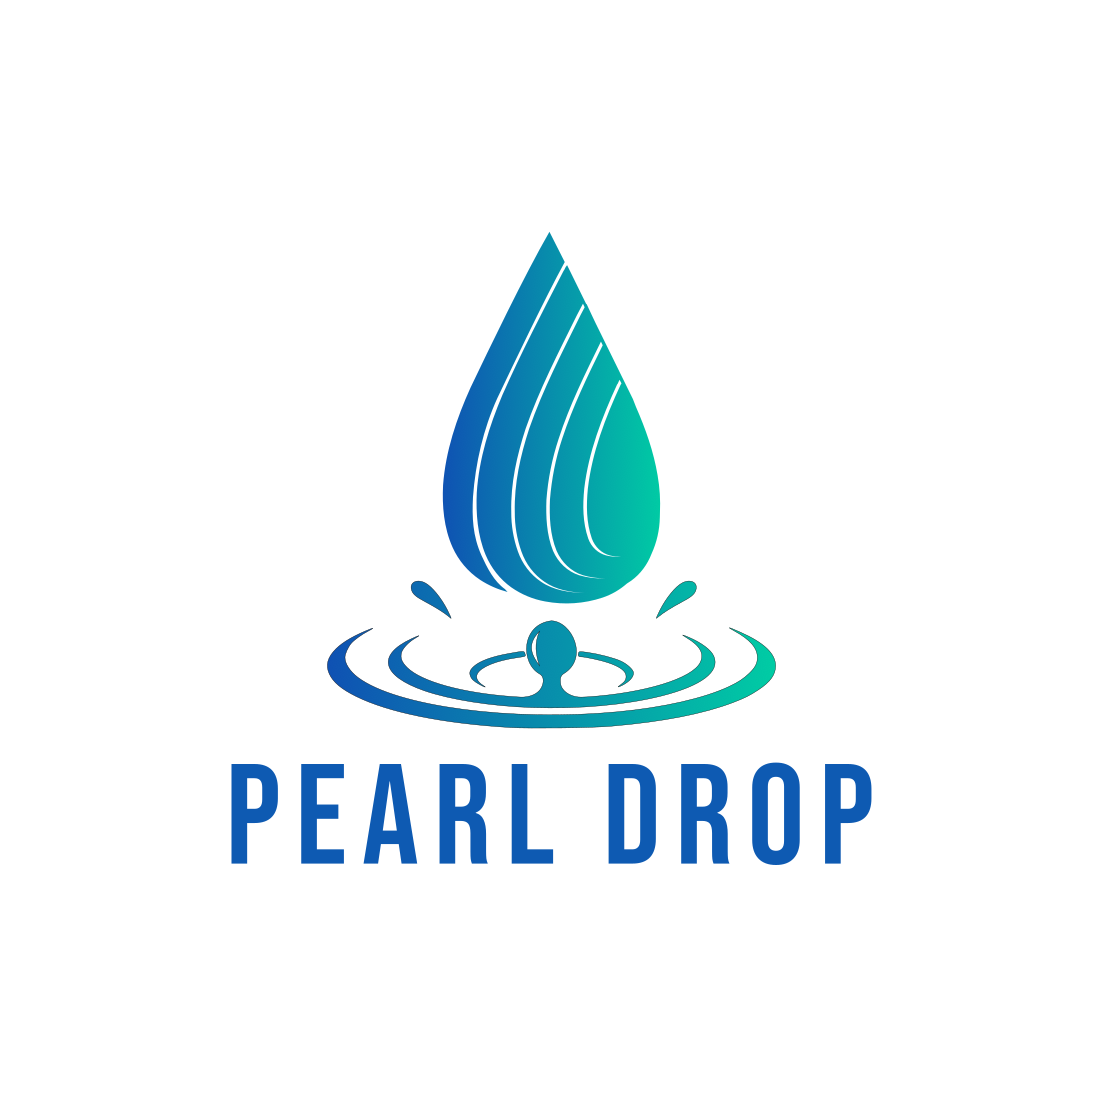 Pearl Drop Creative Design Logo.